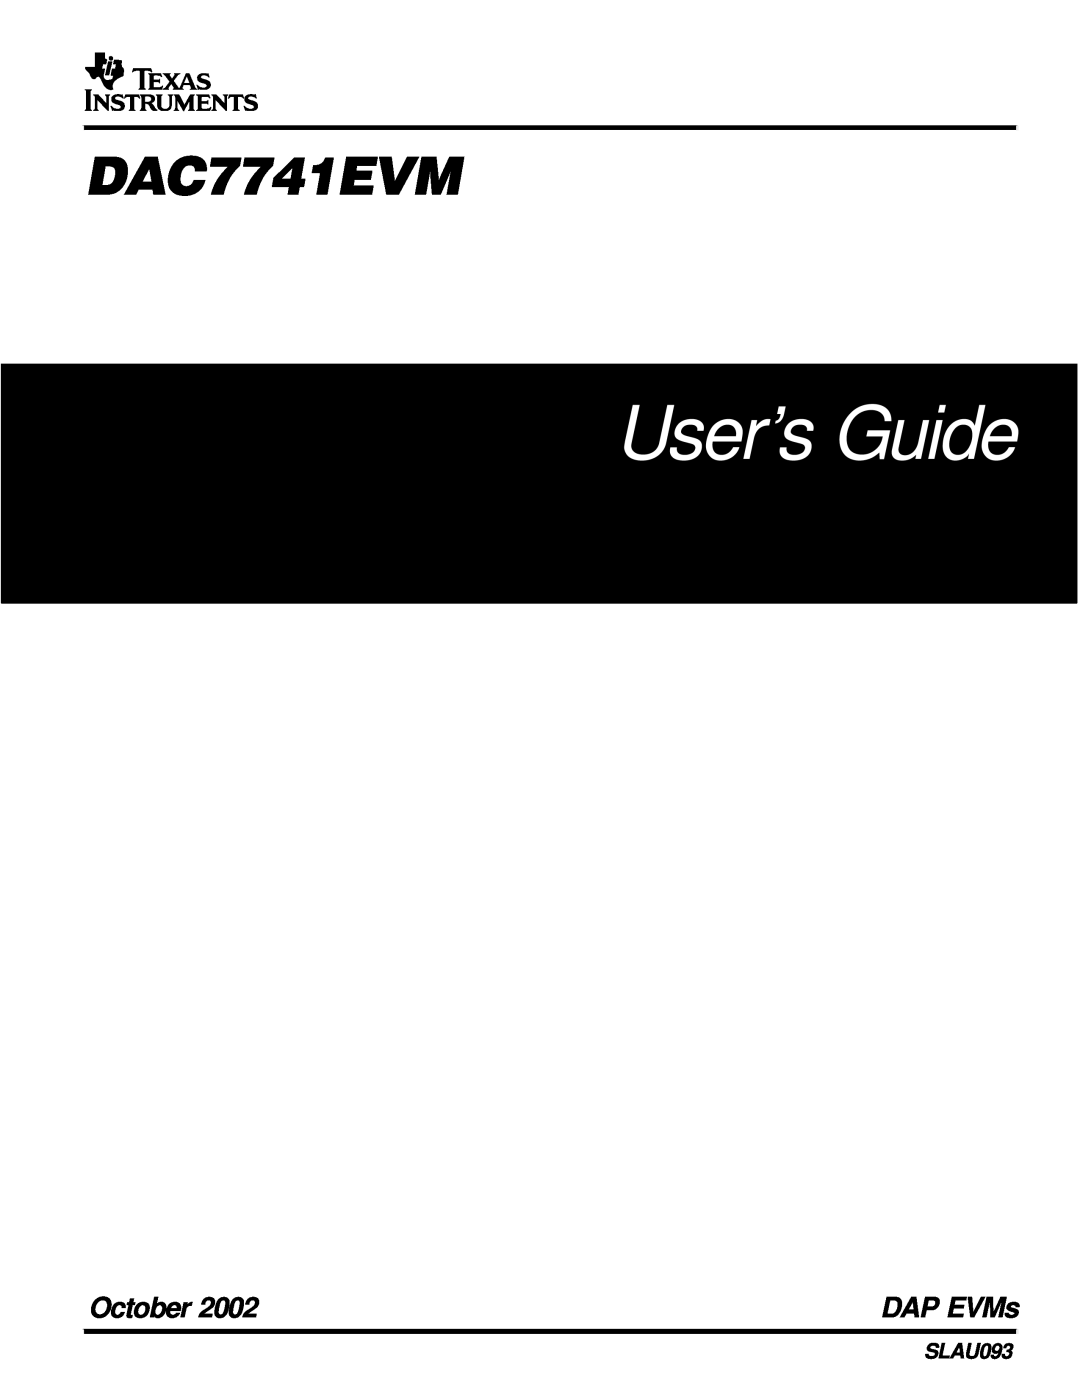 Texas Instruments DAC7741EVM manual User’s Guide, October, DAP EVMs, SLAU093 